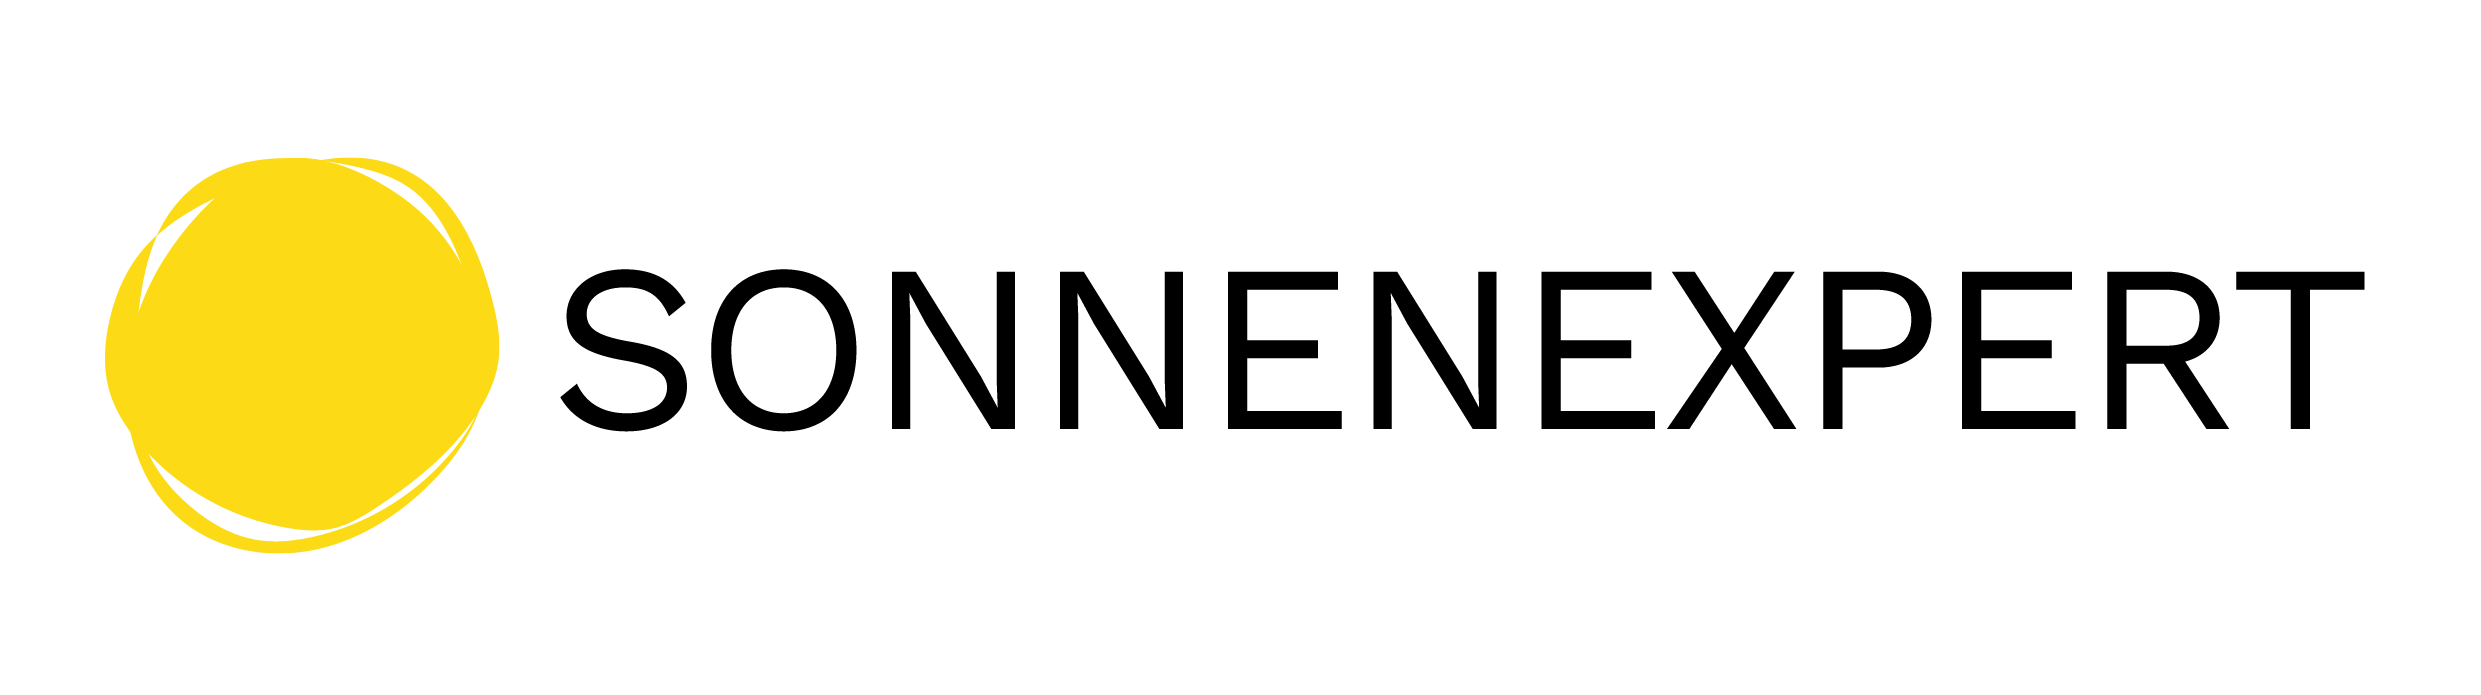 SONNENEXPERT Logo gelb